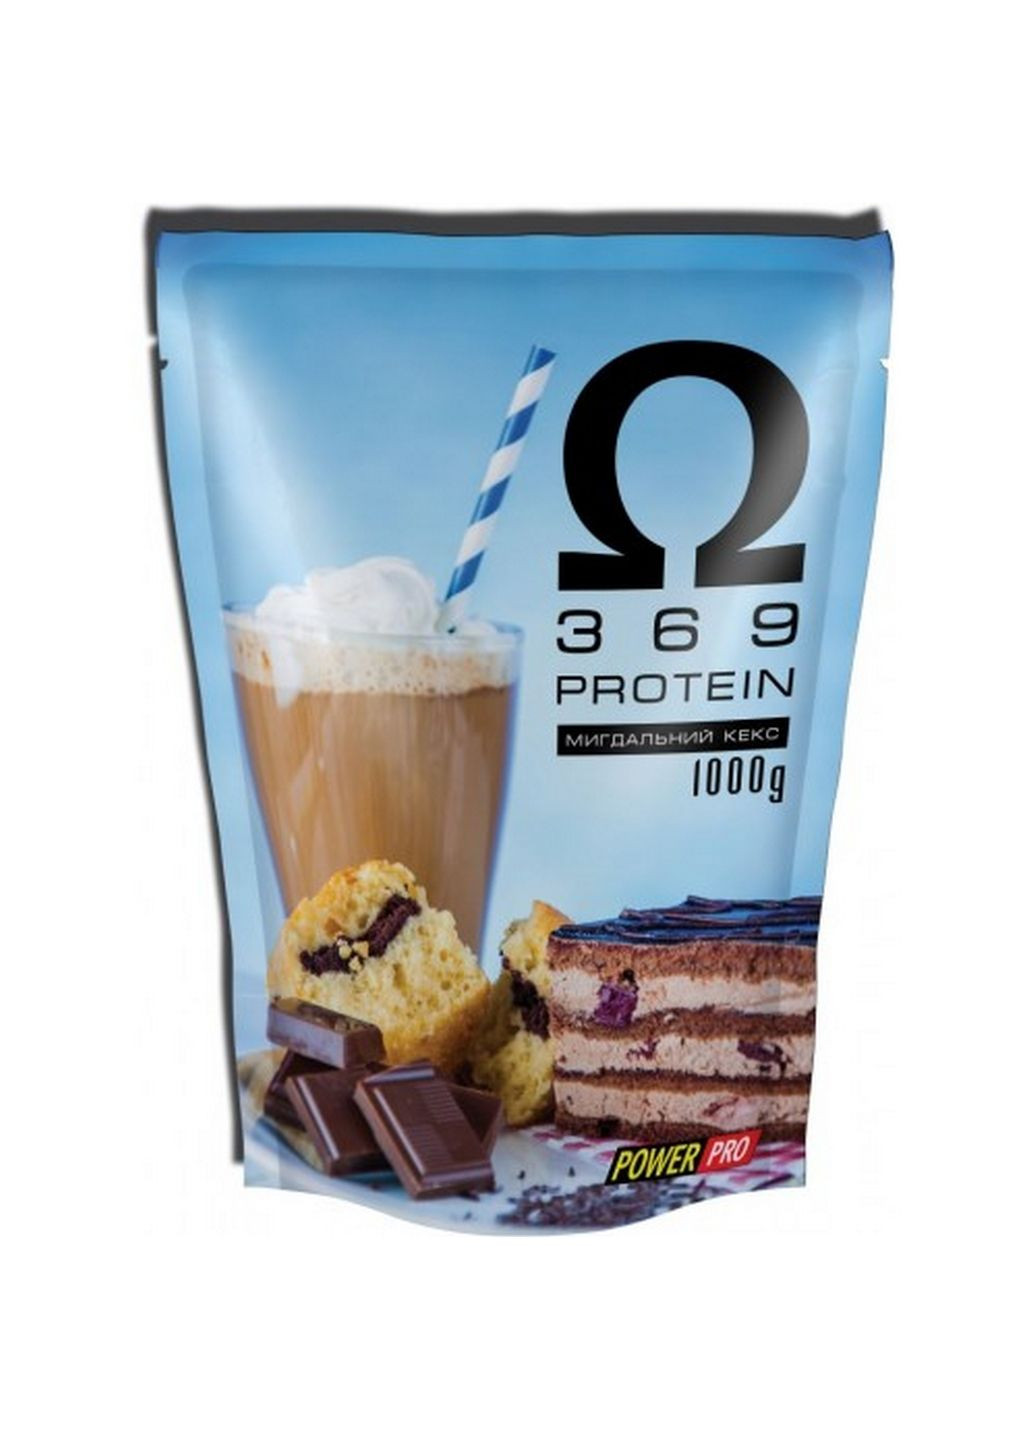 Протеин Omega 3 6 9 Protein, 1 кг - миндальный кекс Power Pro (293416752)